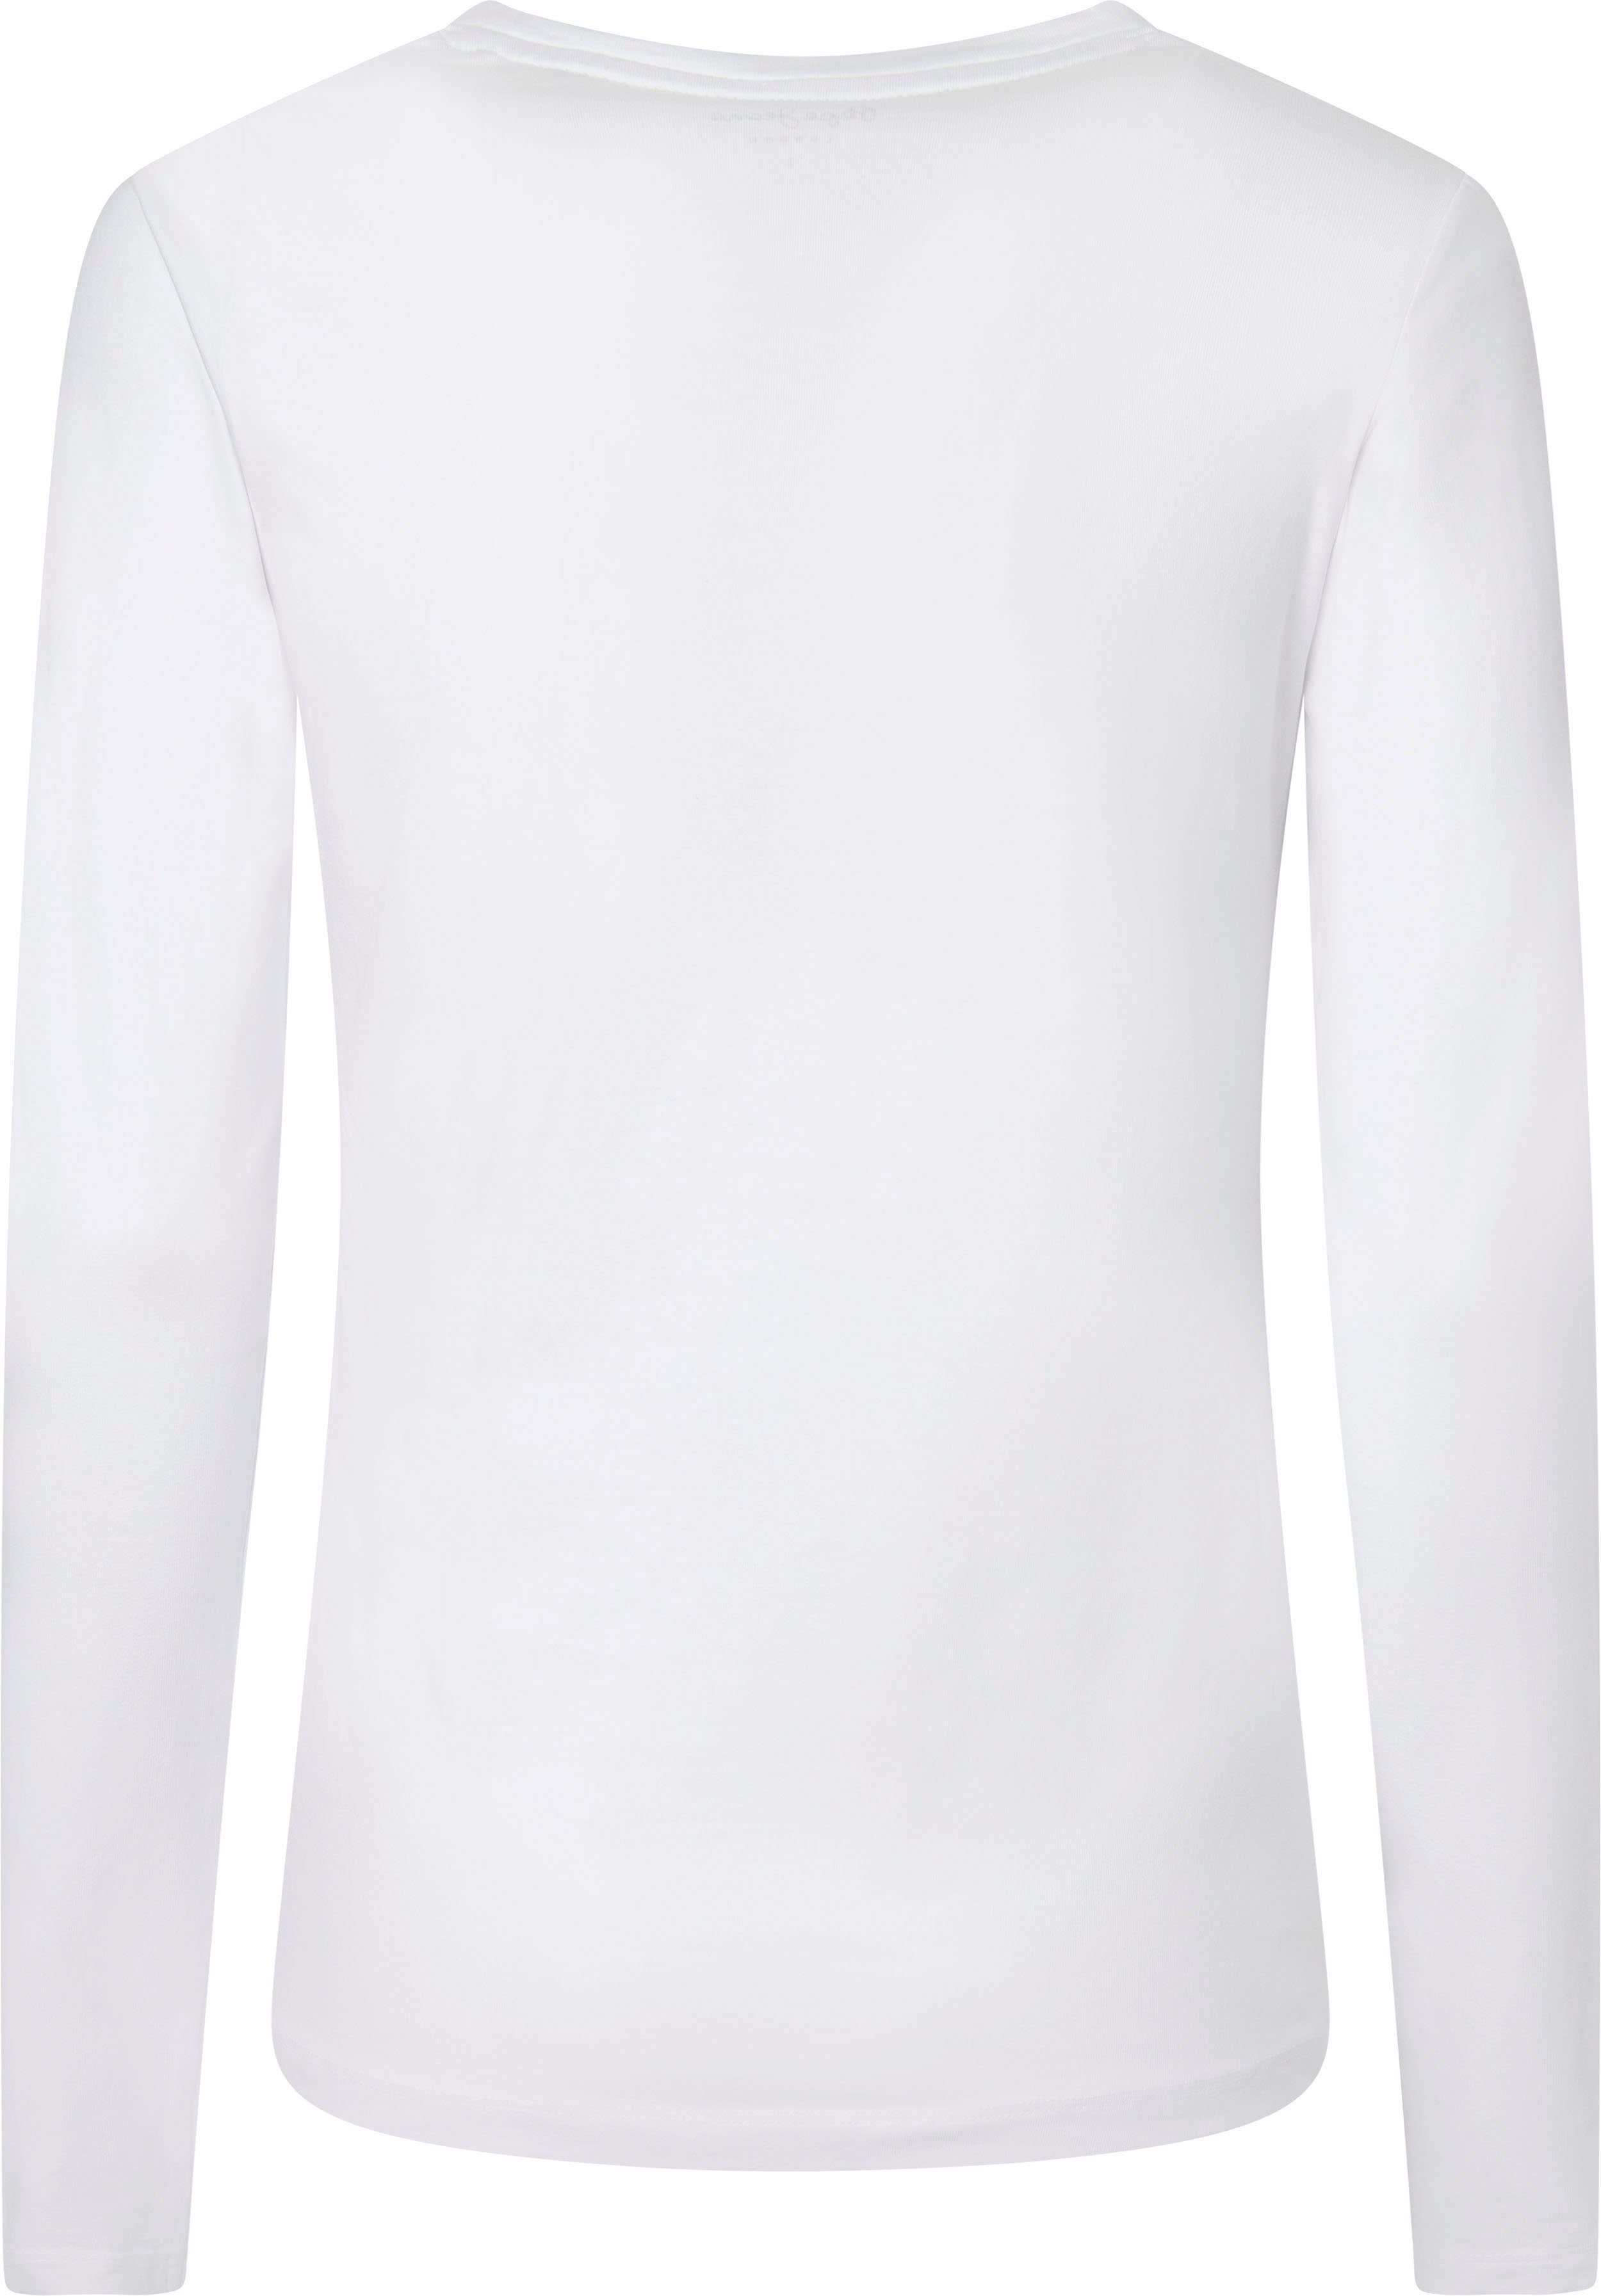 8WHITE Pepe AMBERTA Jeans Brustbereich im mit N kleinem Marken-Logo-Print Langarmshirt